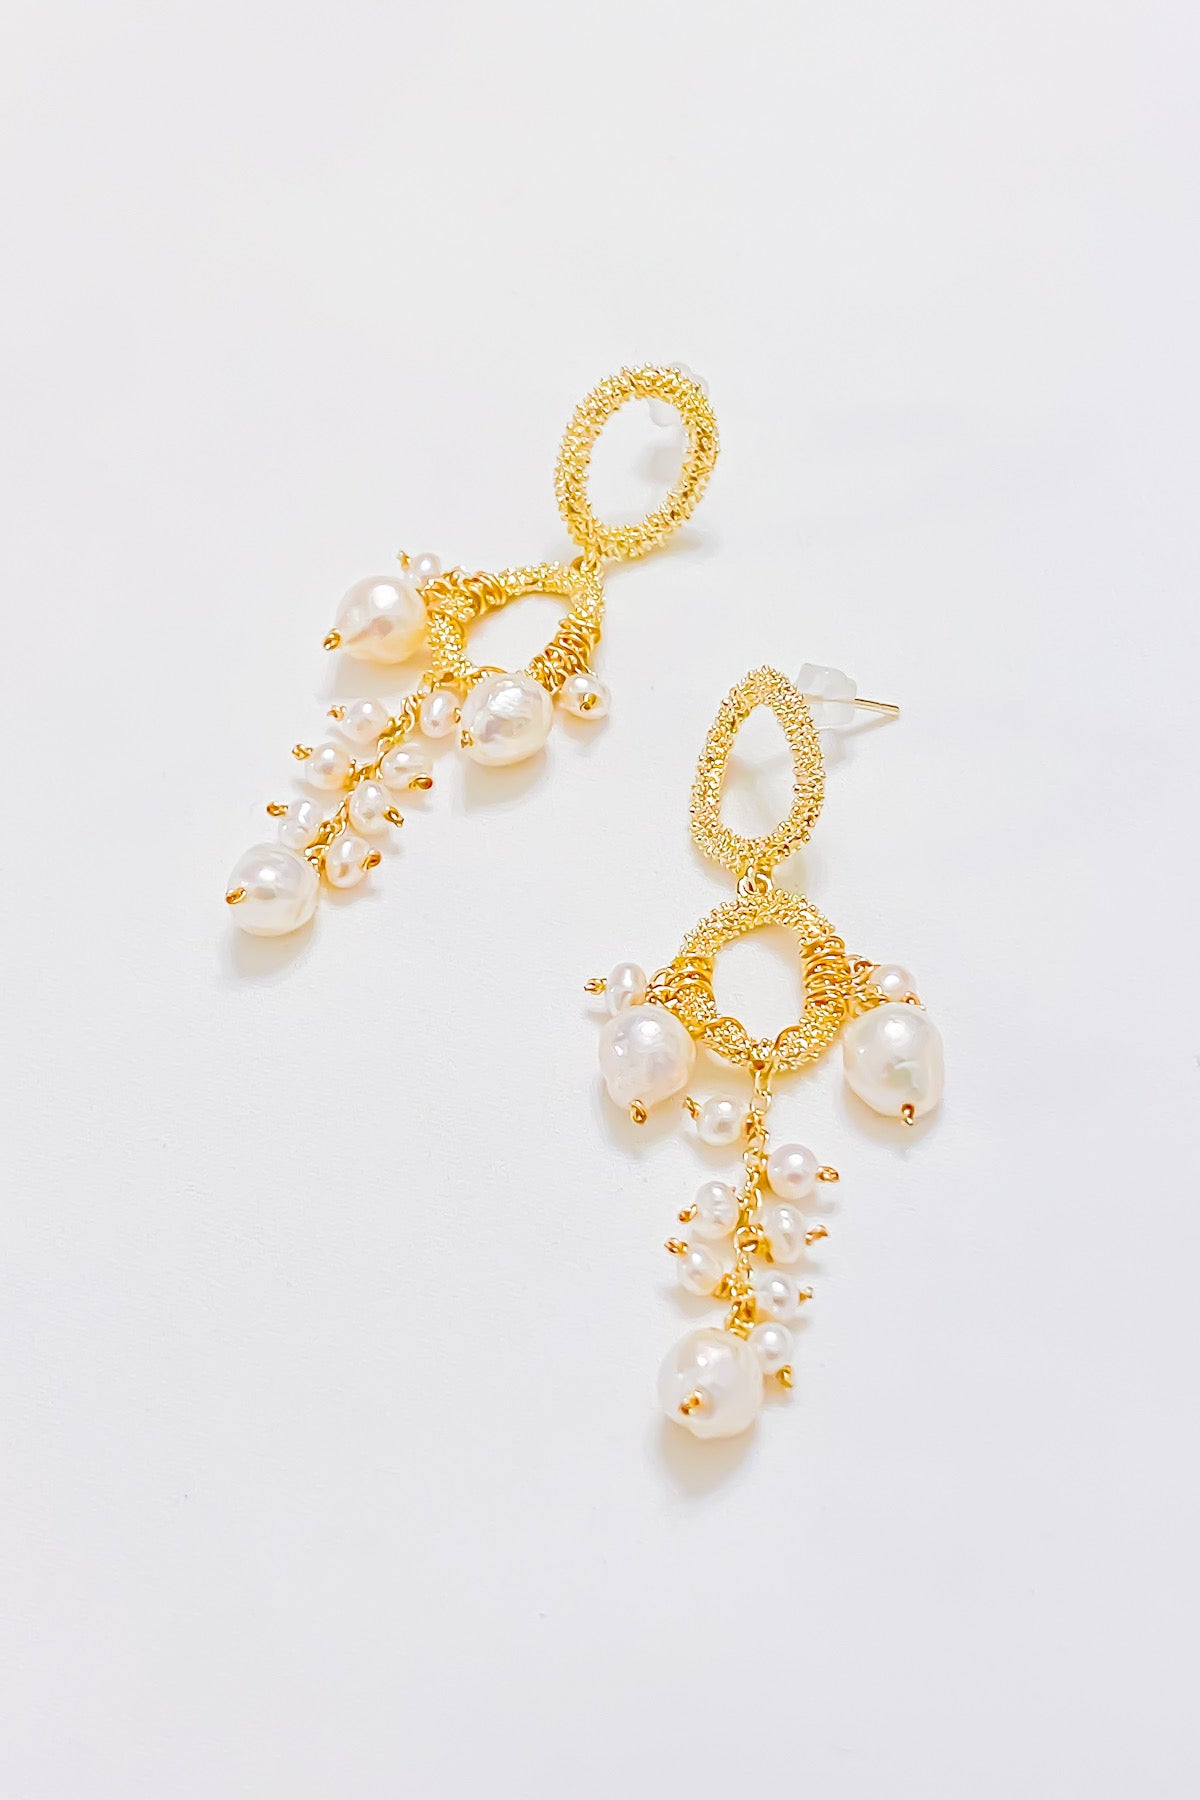 SKYE San Francisco Shop SF Chic Modern Elegant Classy Women Jewelry French Parisian Minimalist Liana 18K Gold Freshwater Pearl Earrings 4